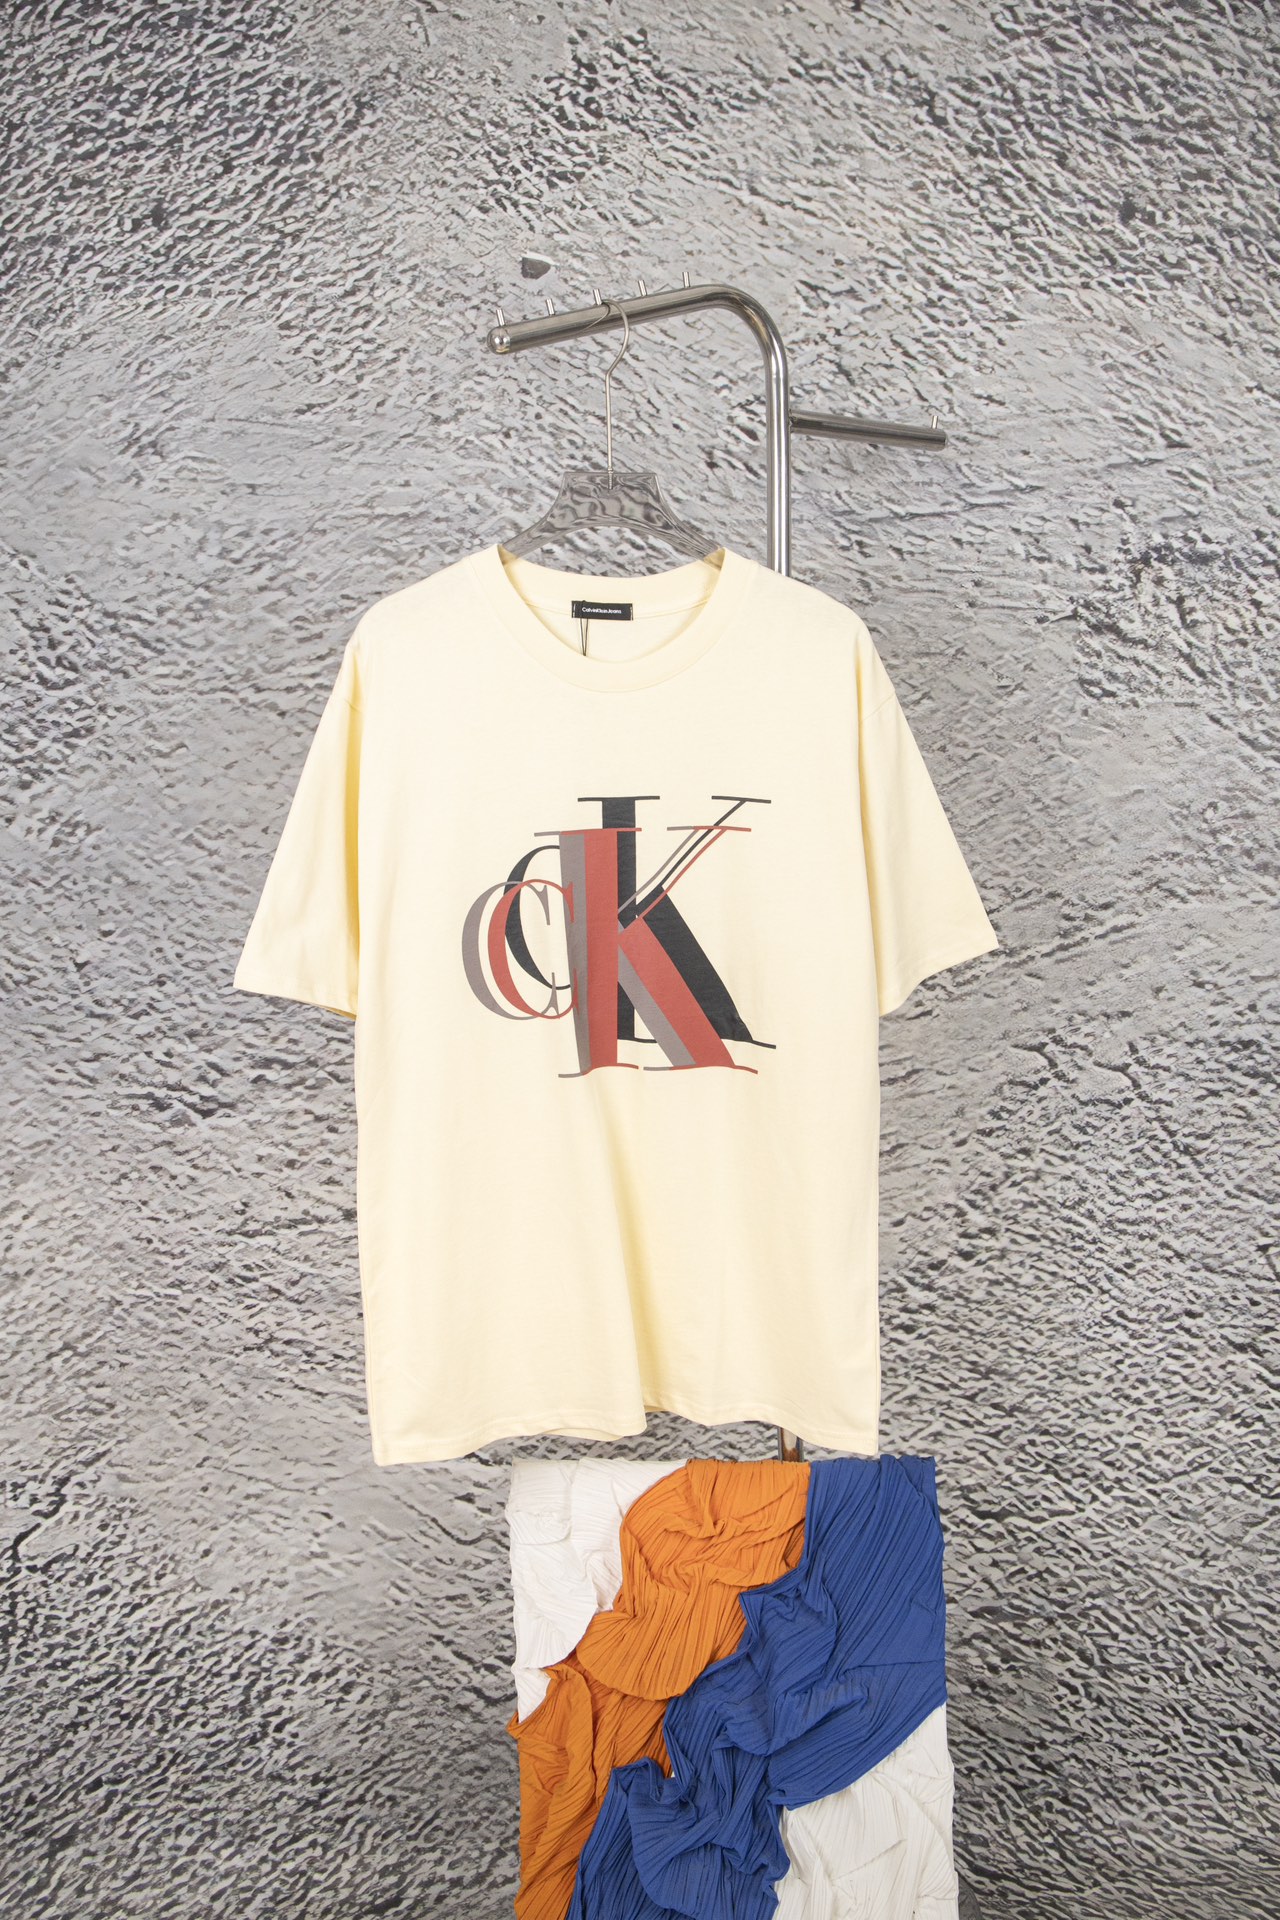 Calvin Klein Clothing T-Shirt Beige Cotton Spring Collection Short Sleeve